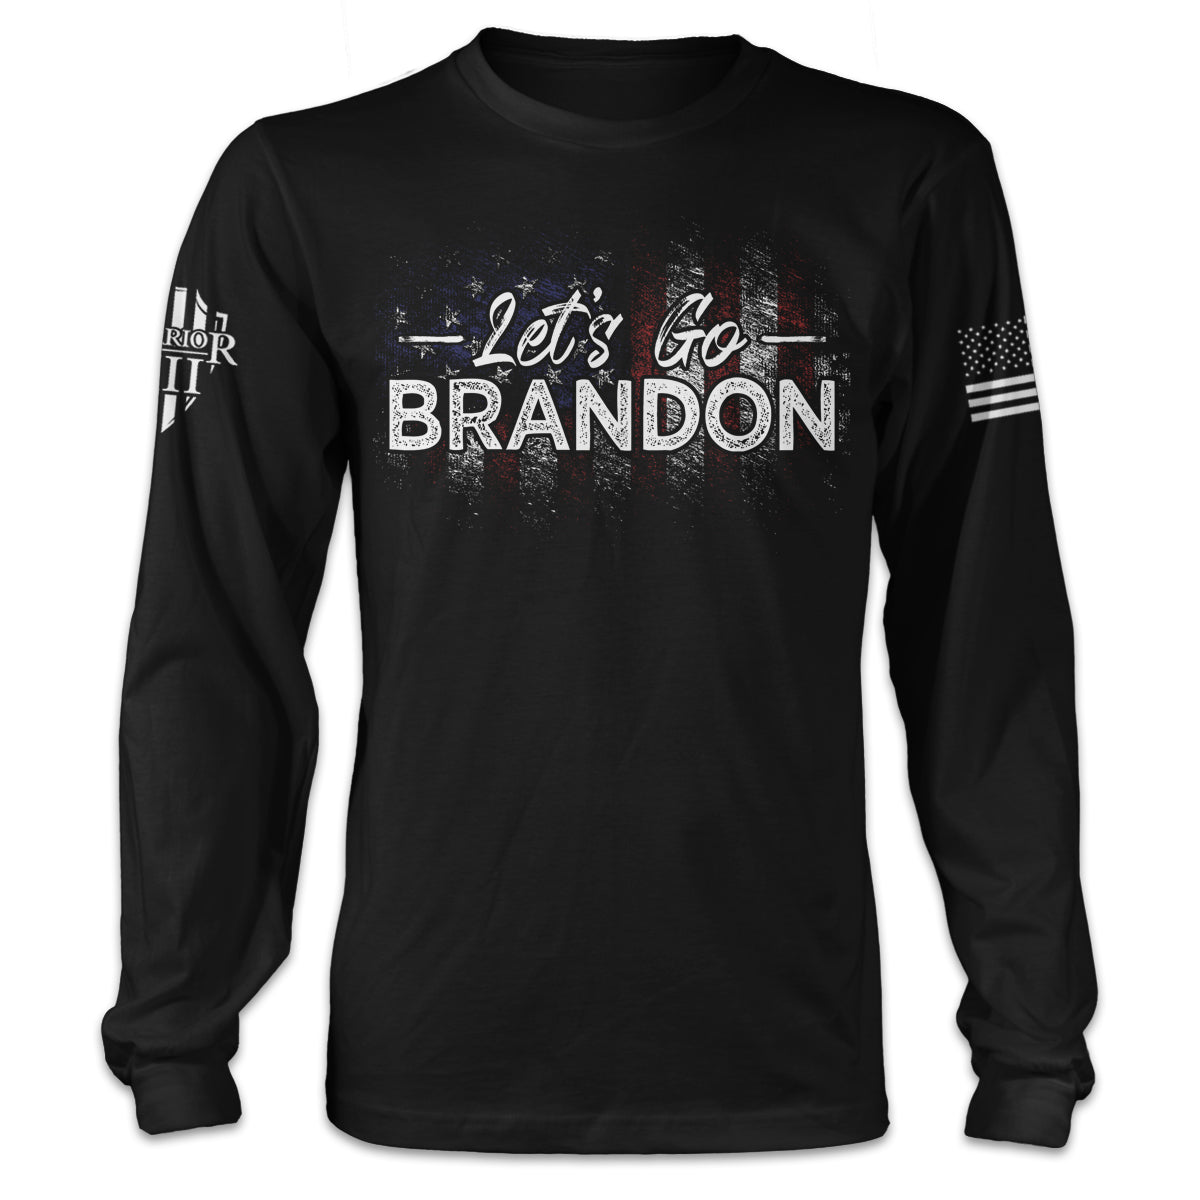 Brandon is Kind of a Big Deal' Women's Premium Longsleeve Shirt